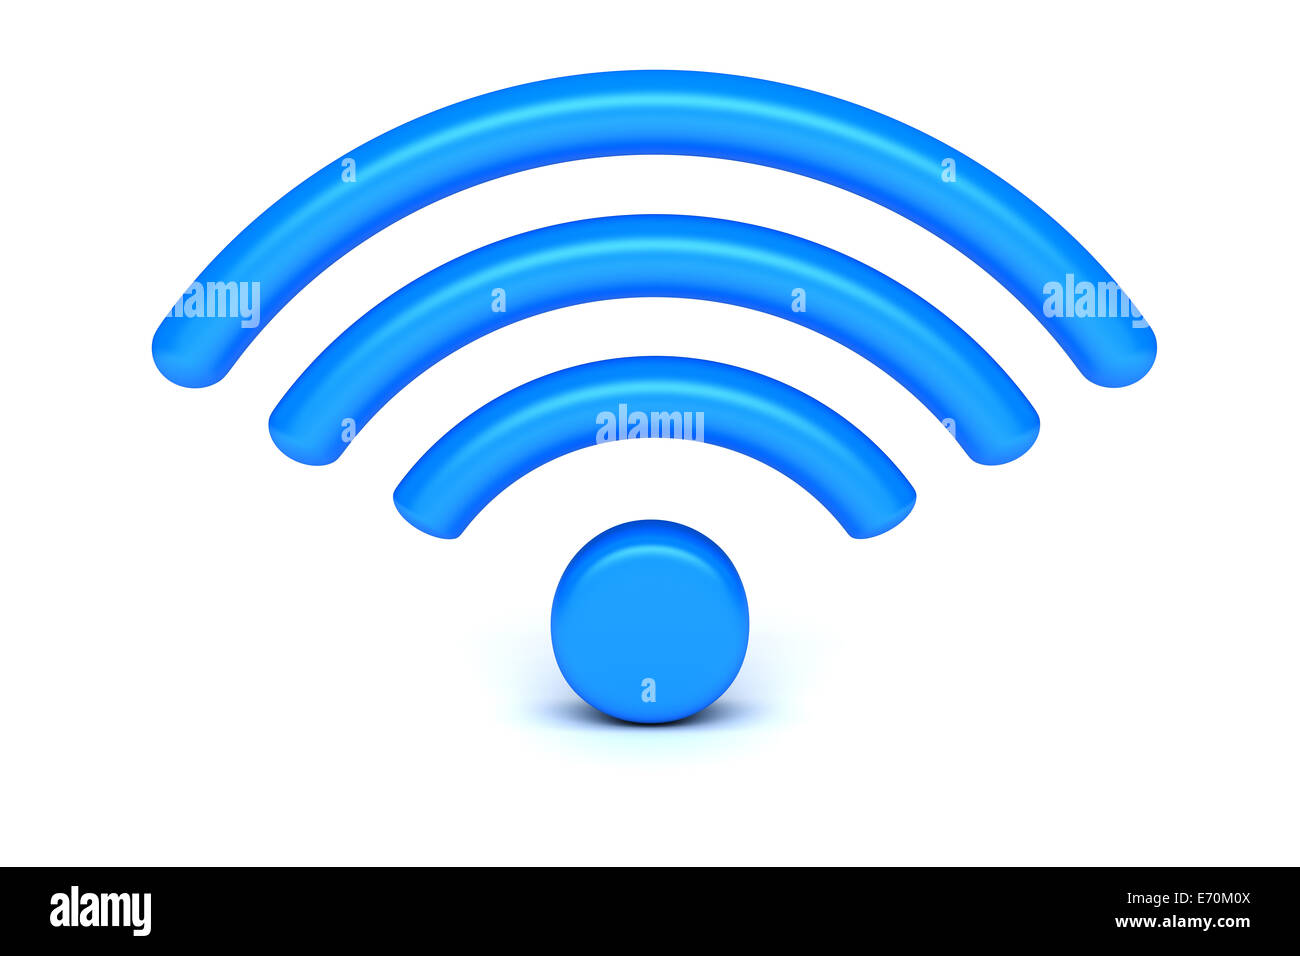 WiFi symbol Stock Photo